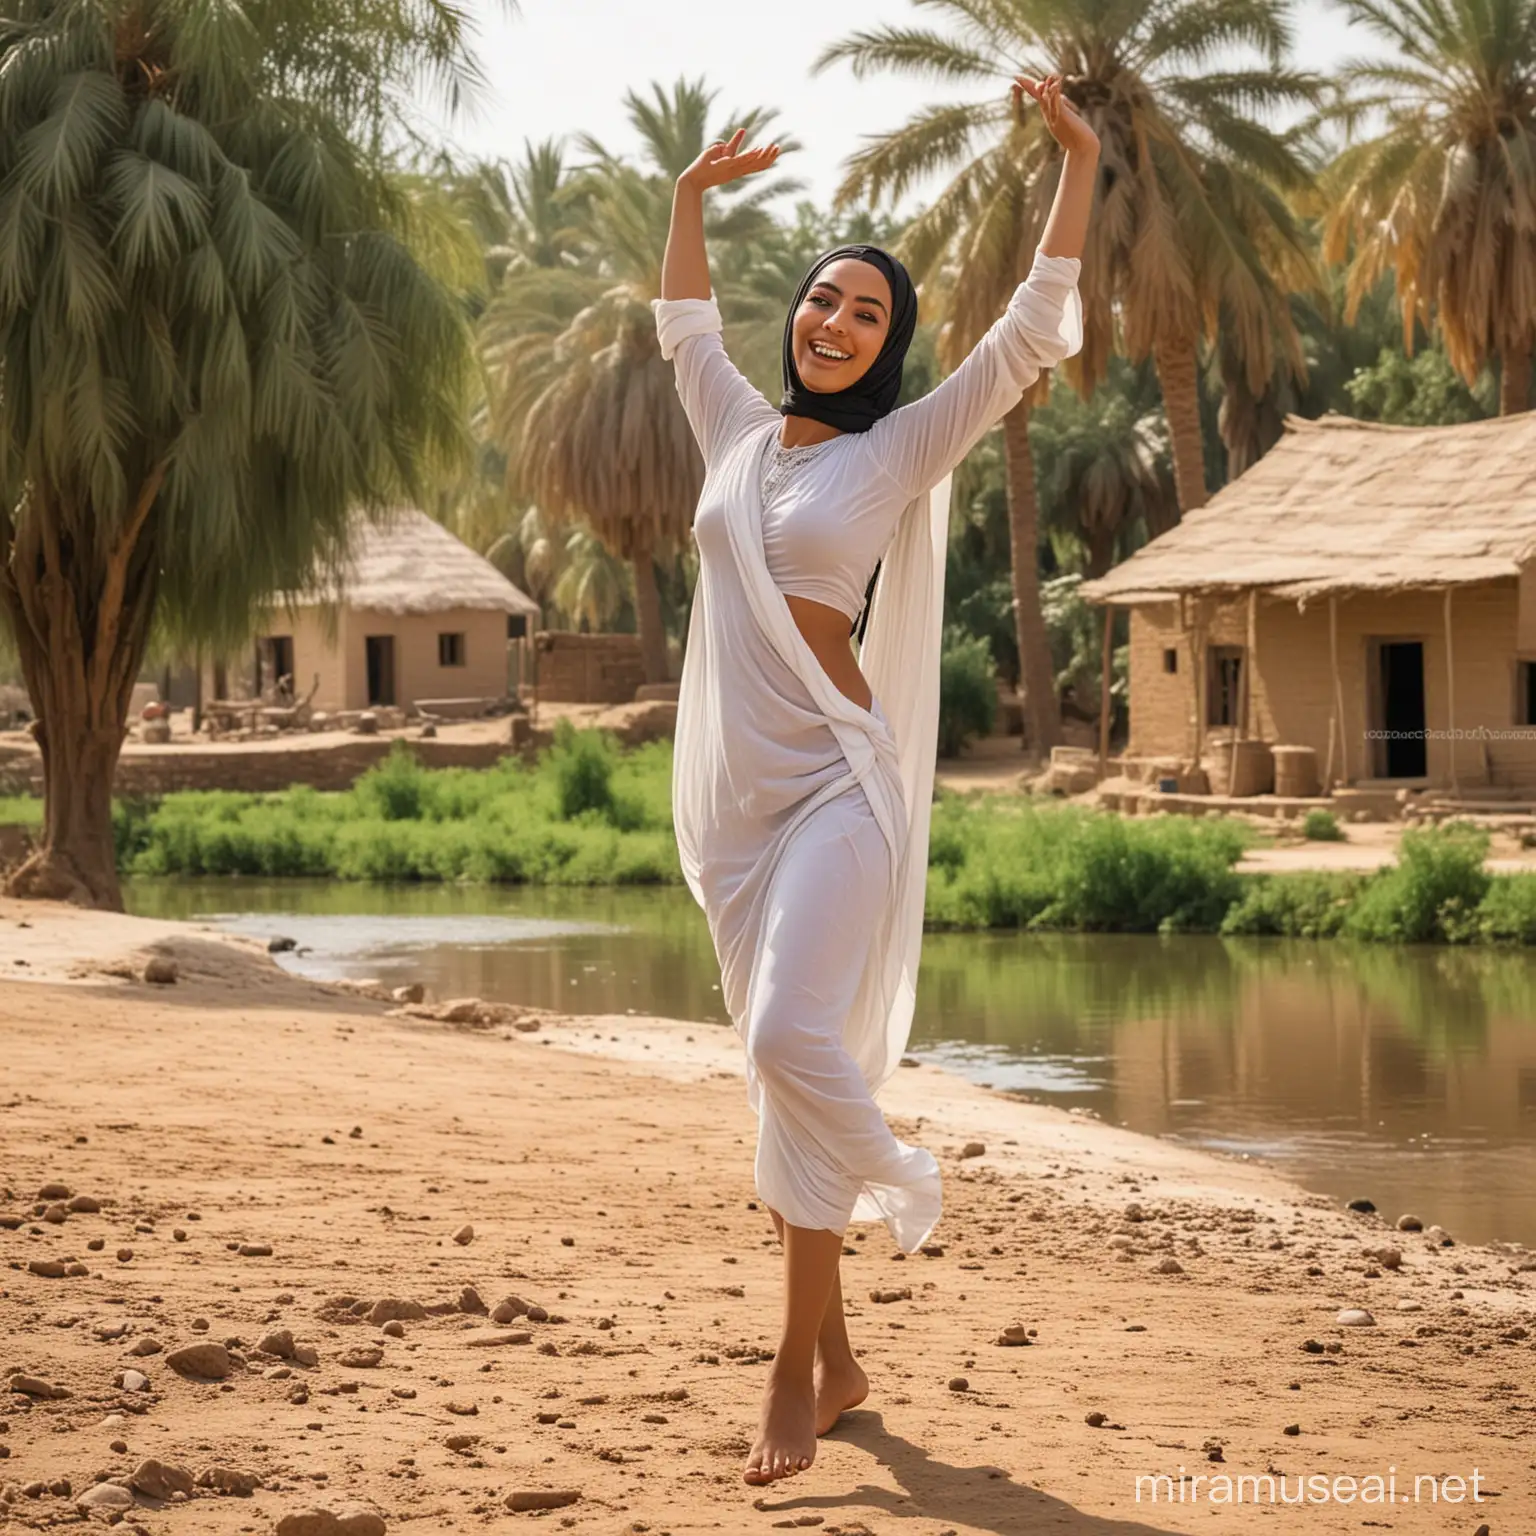 Egyptian Hijab Woman Dancing Nude by Riverside Village House Amidst Farm Fields